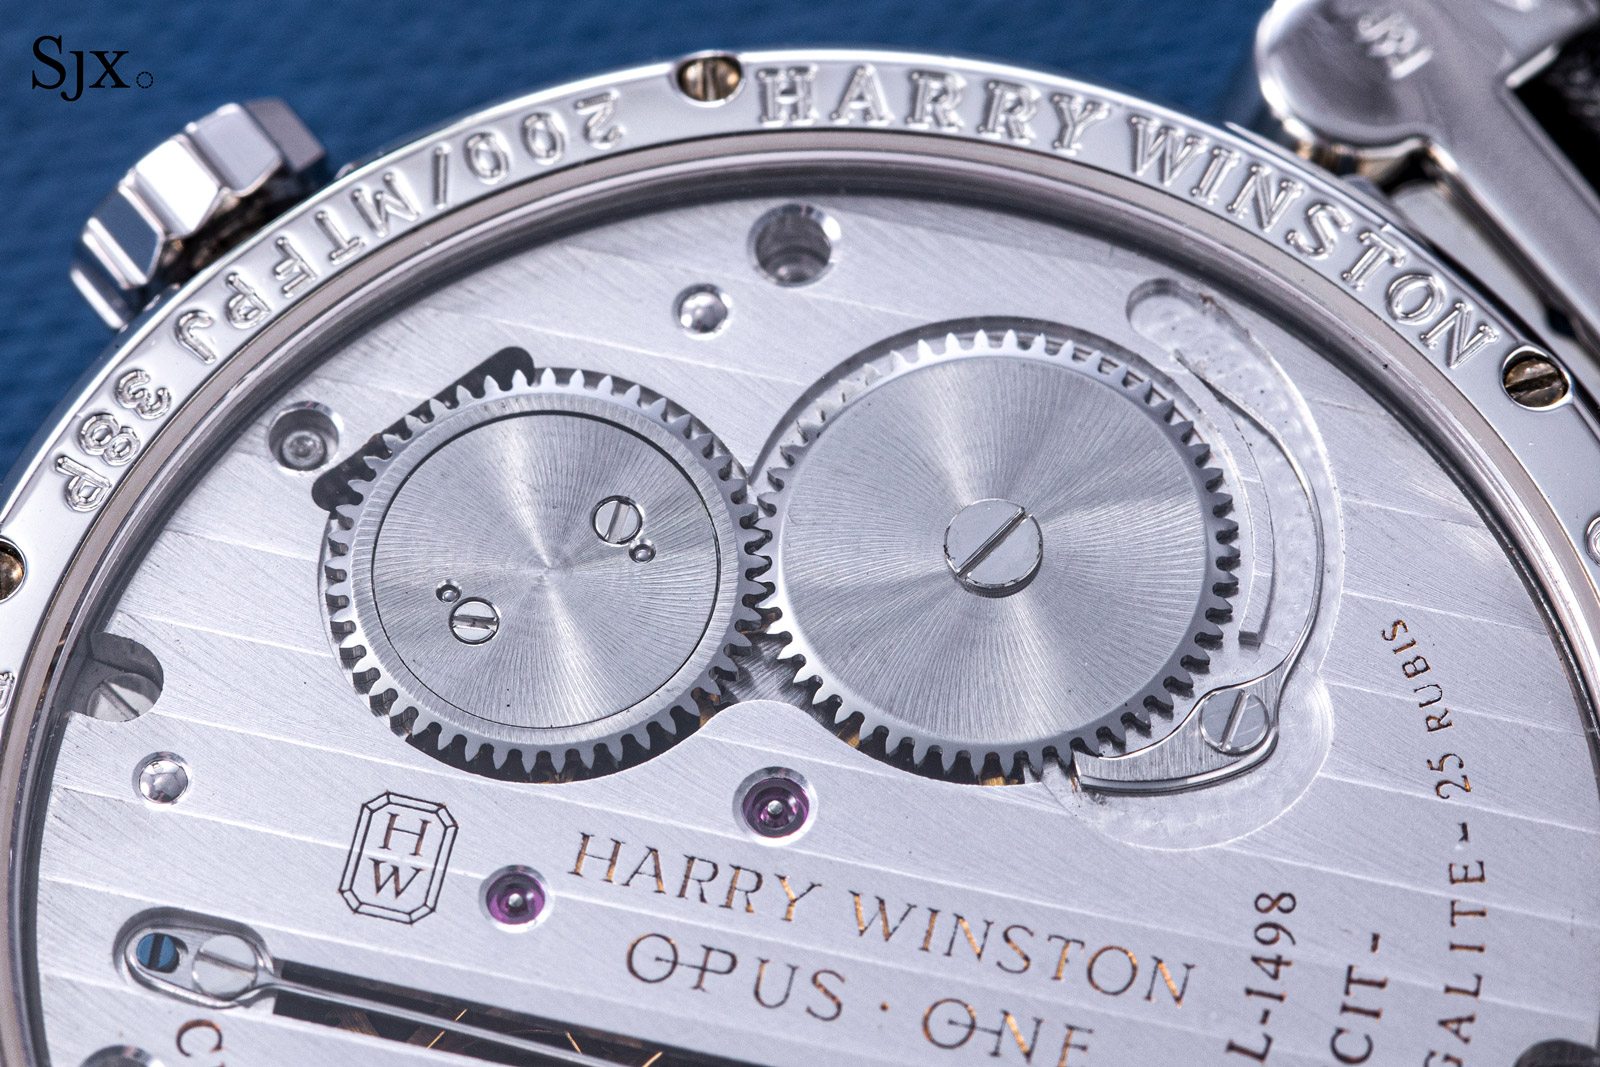 Up Close: Harry Winston Opus 1 Tourbillon by F.P. Journe | SJX Watches